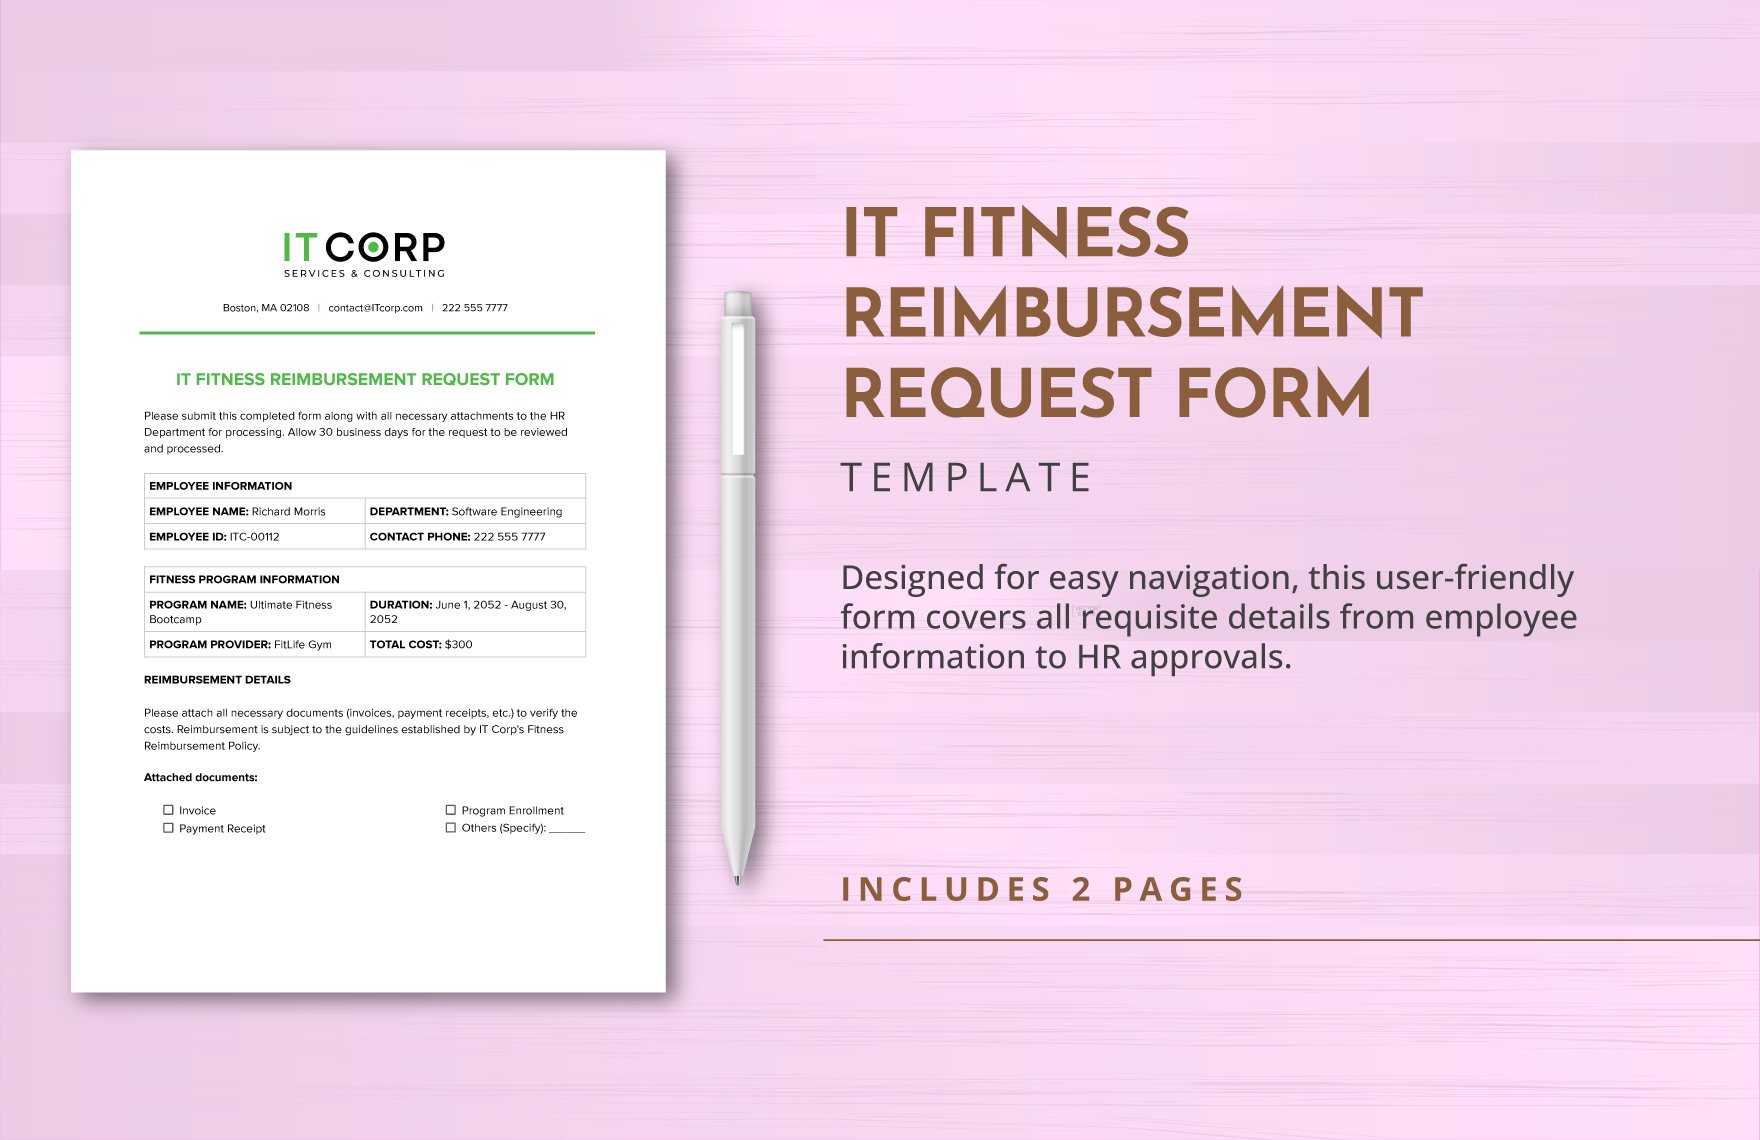 IT Fitness Reimbursement Request Form Template